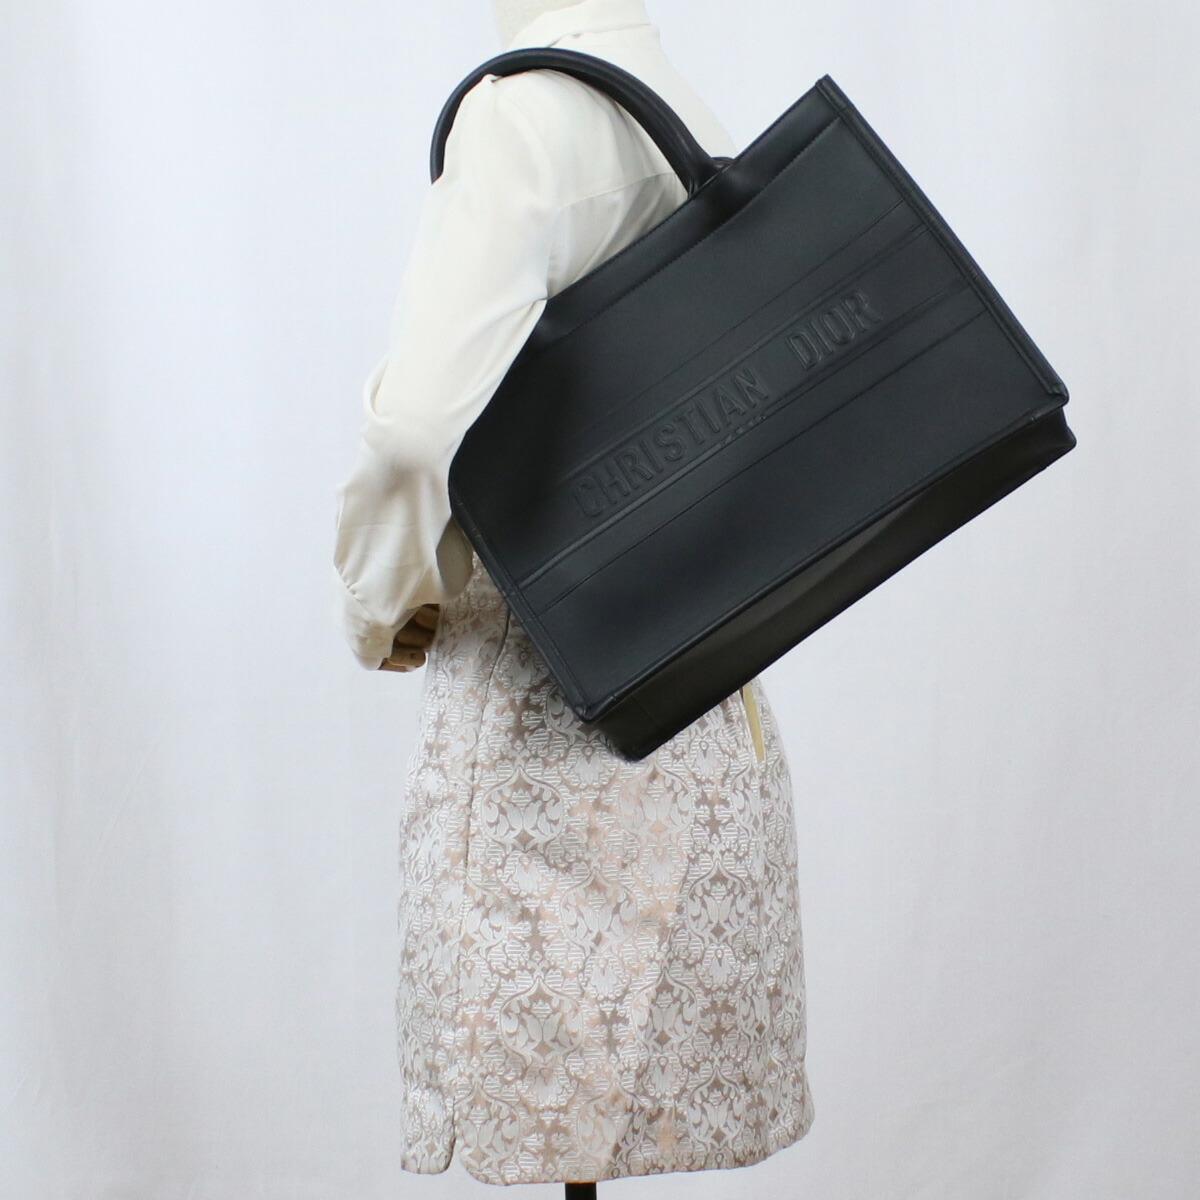 Belove Brandshop ディオール Christian Dior トートバッグ ブックトート ミディアム 通勤 通勤 M1296  ZGSB M900 ブラック bag-01